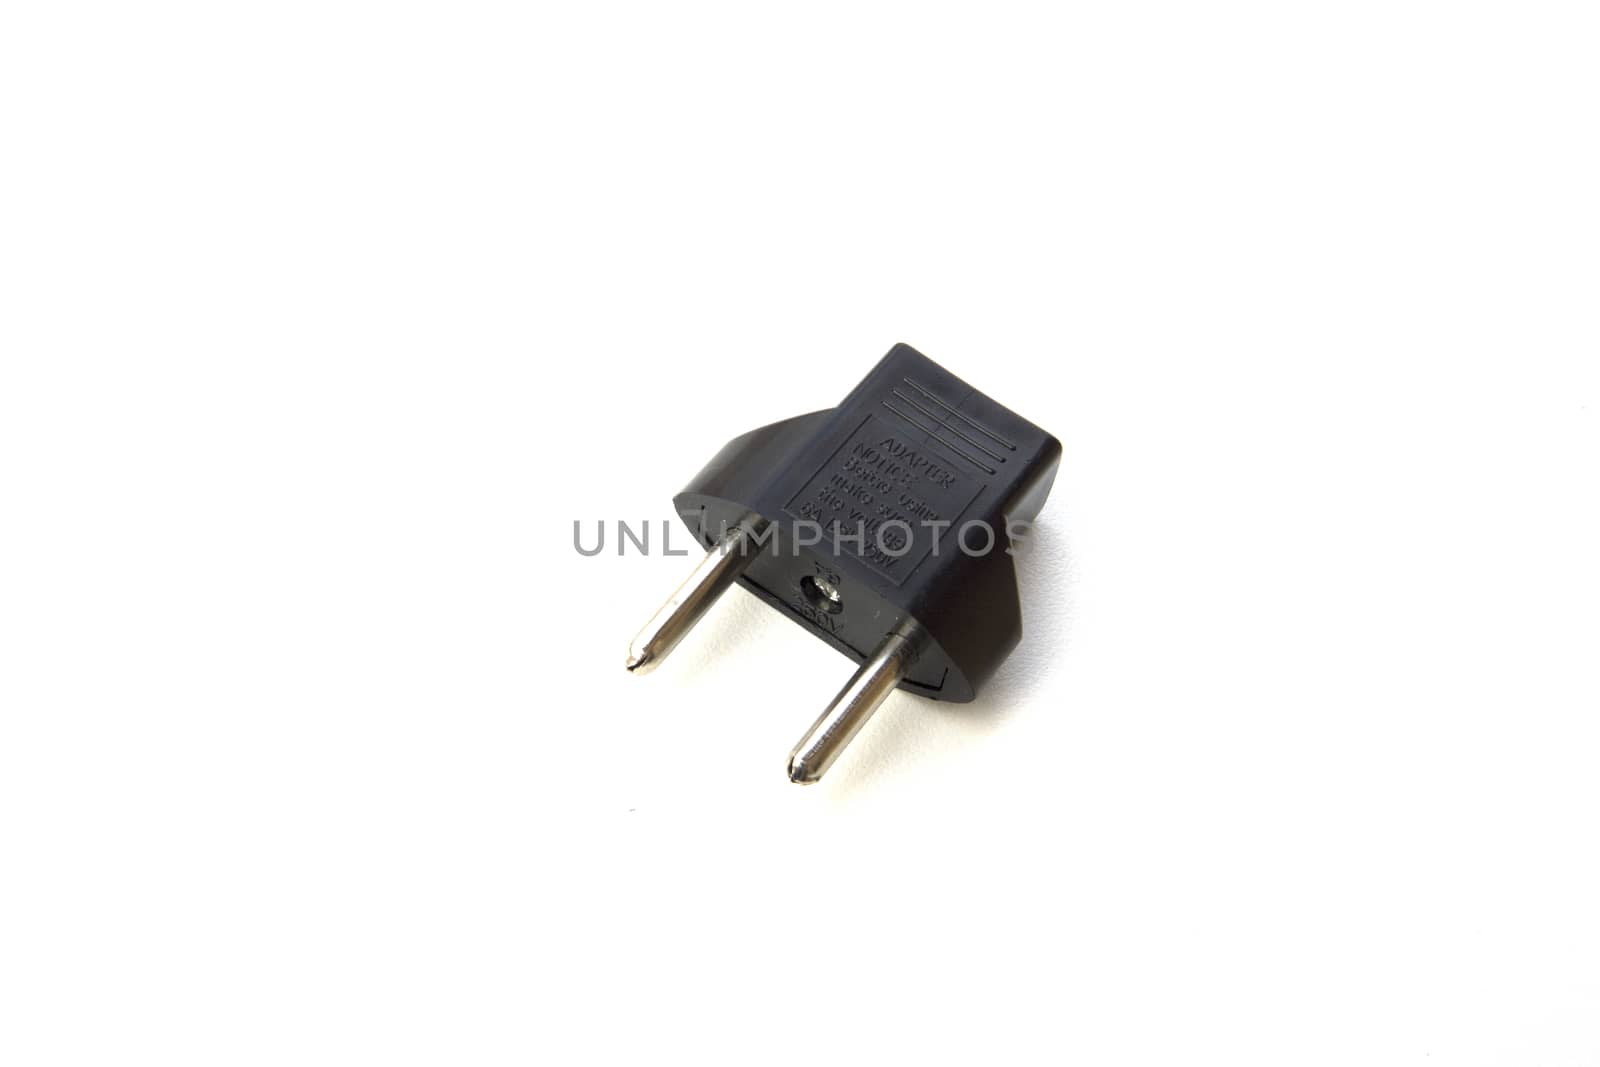 Black plug adapter on white background. by sonandonures